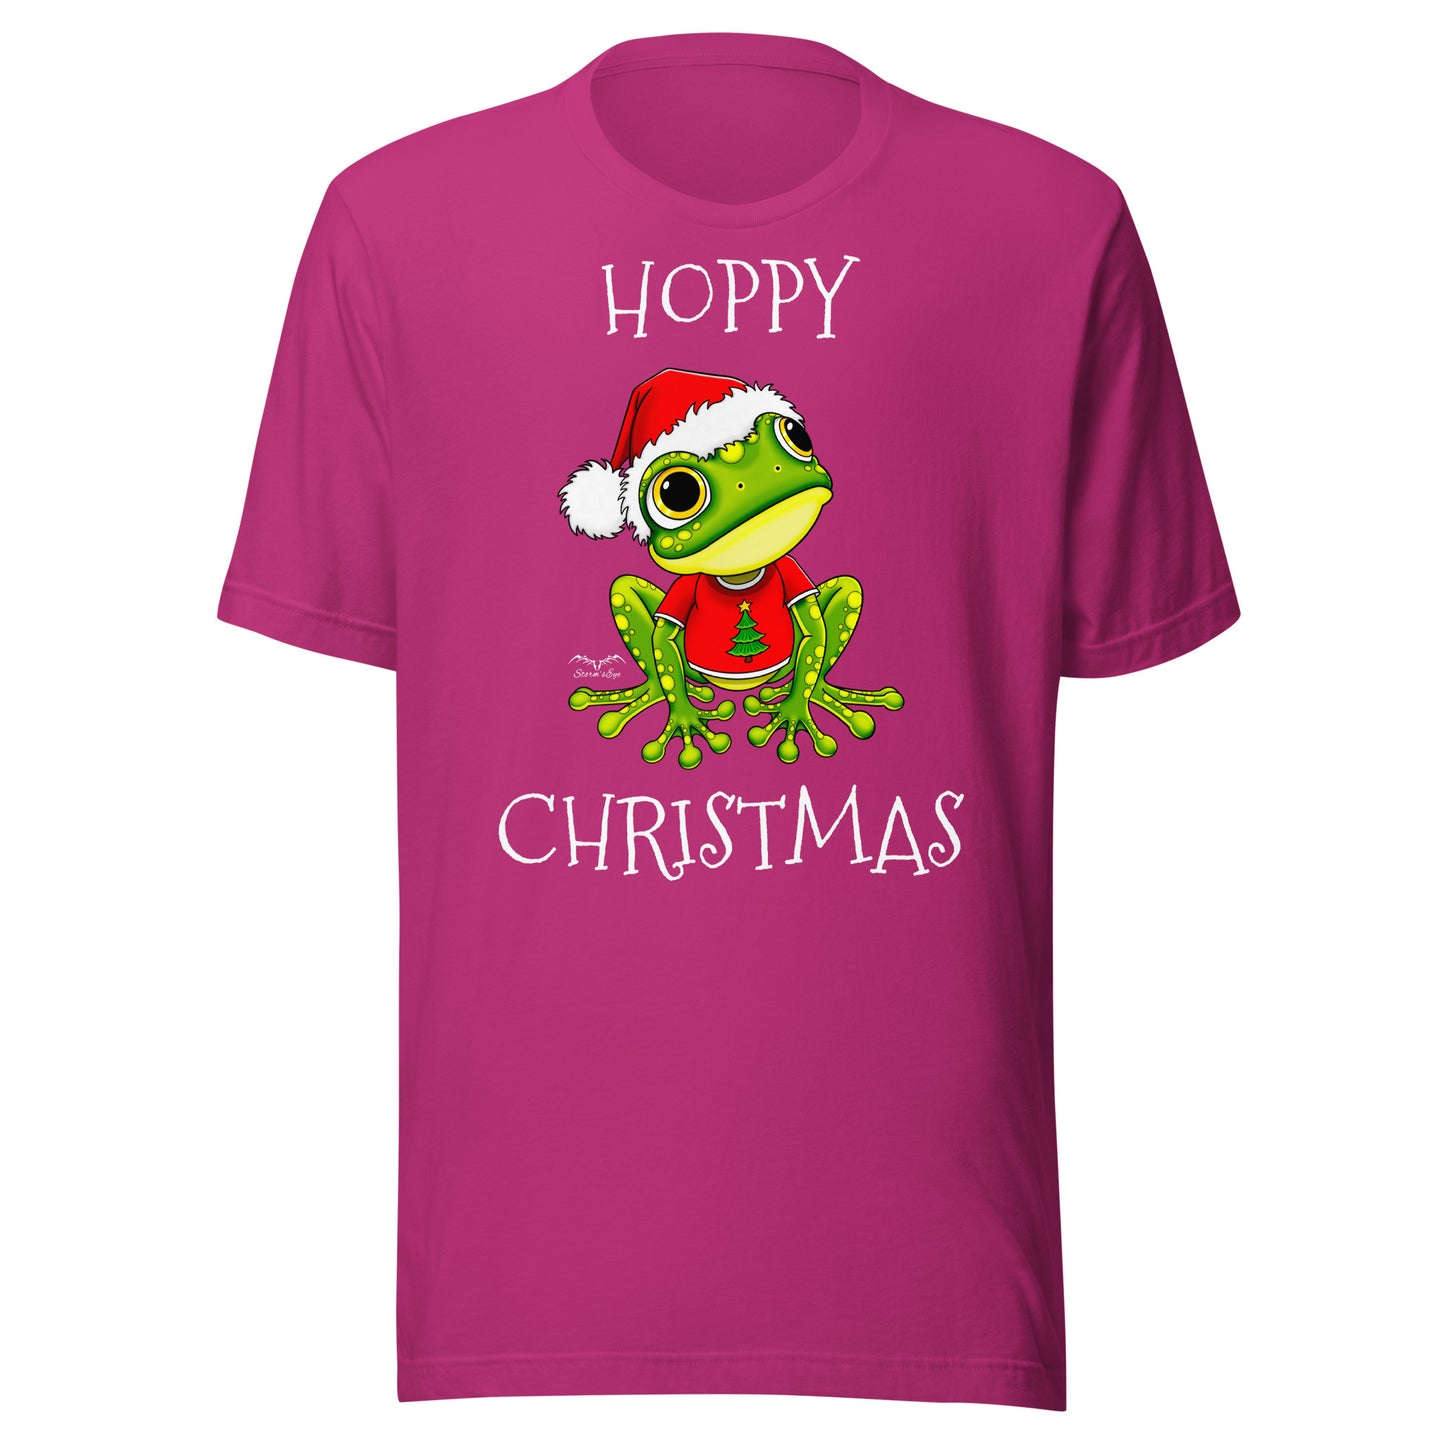 stormseye design hoppy christmas santa frog T shirt, flat view pink